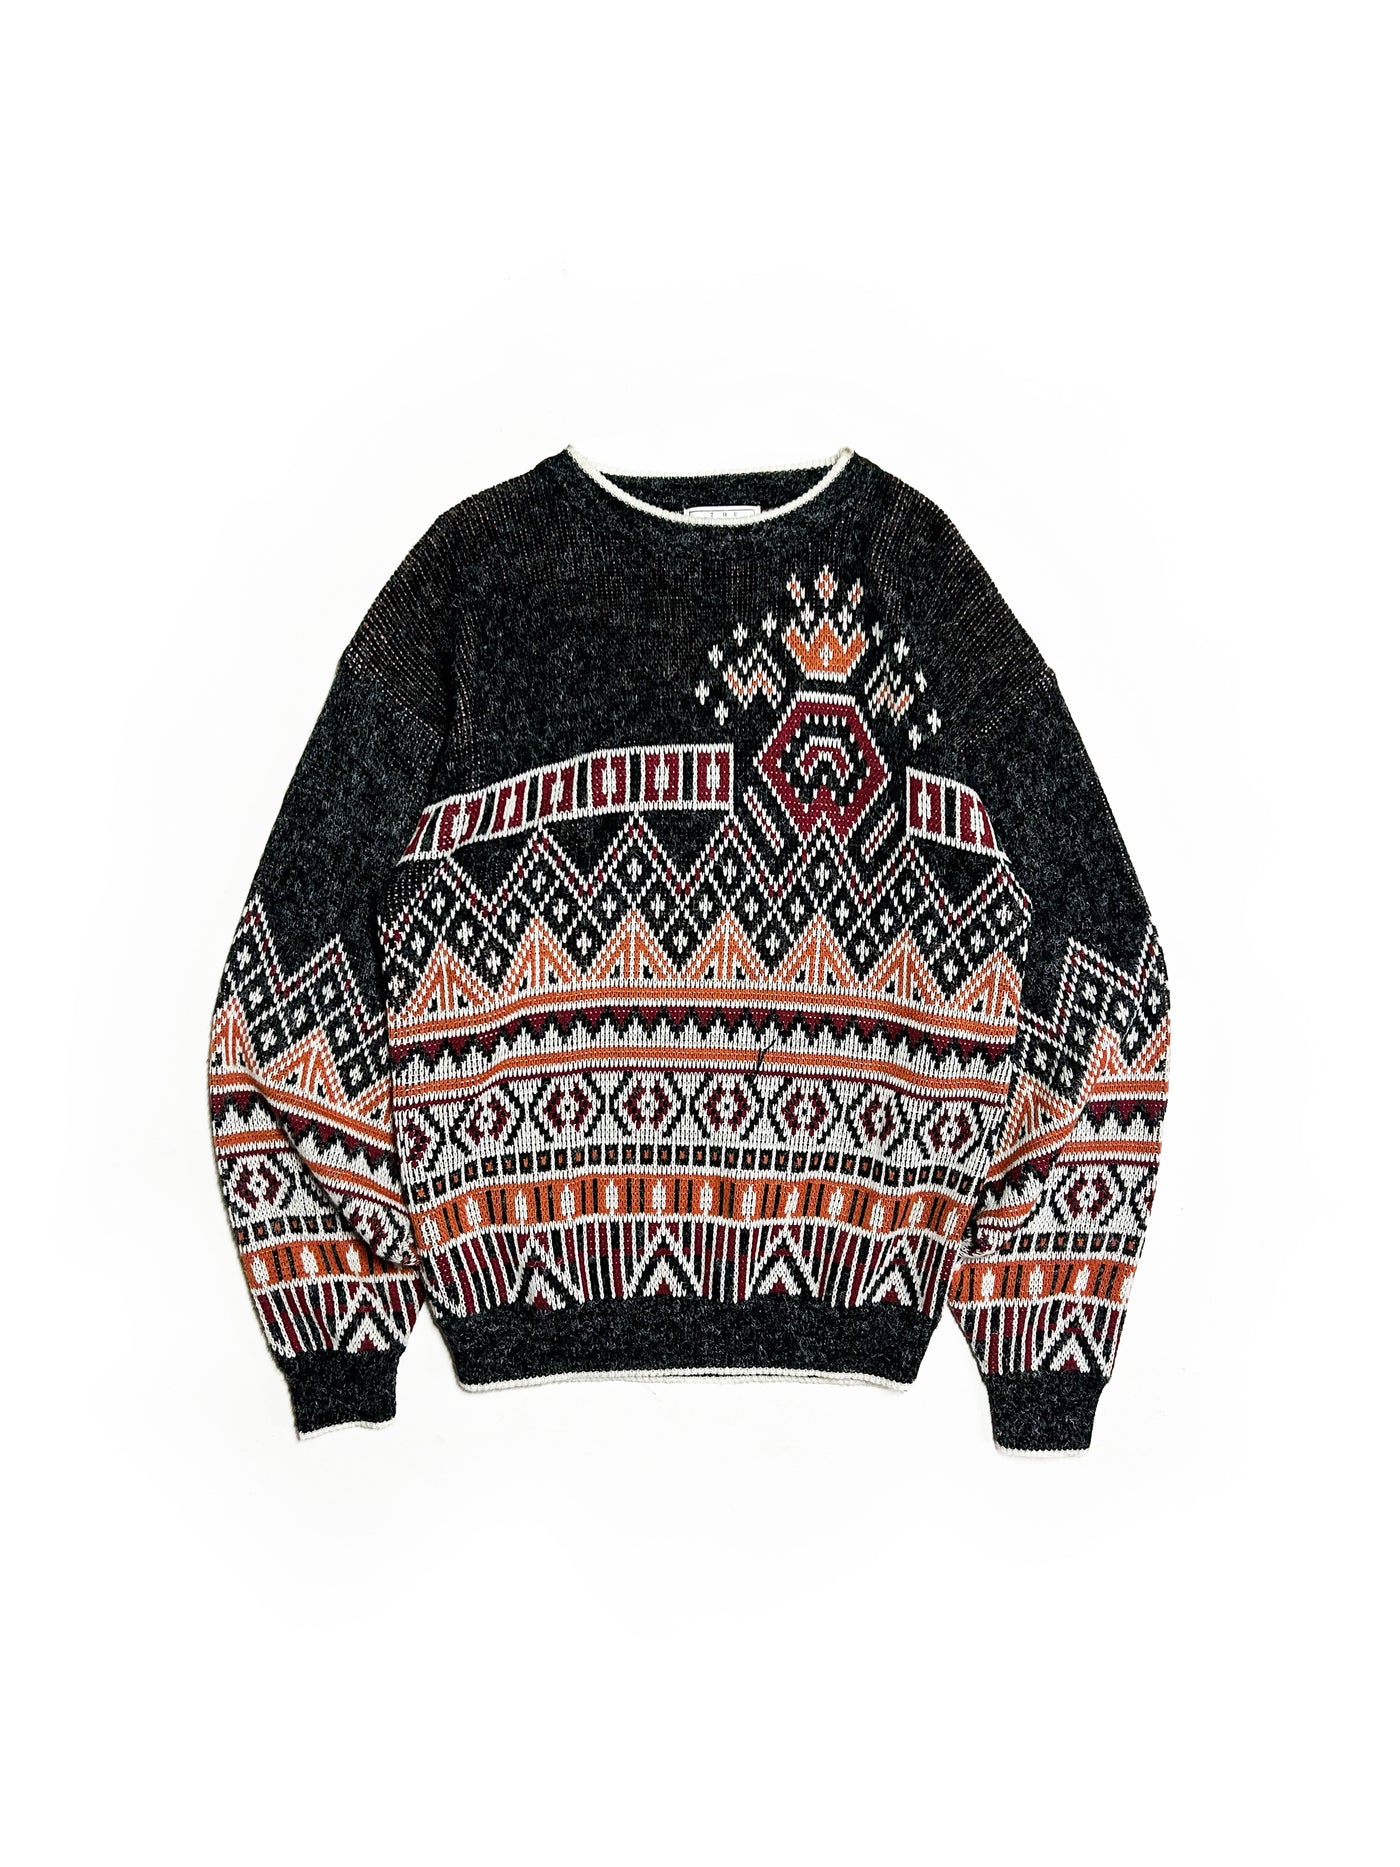 Vintage 90s Men’s Store Patterned Sweater